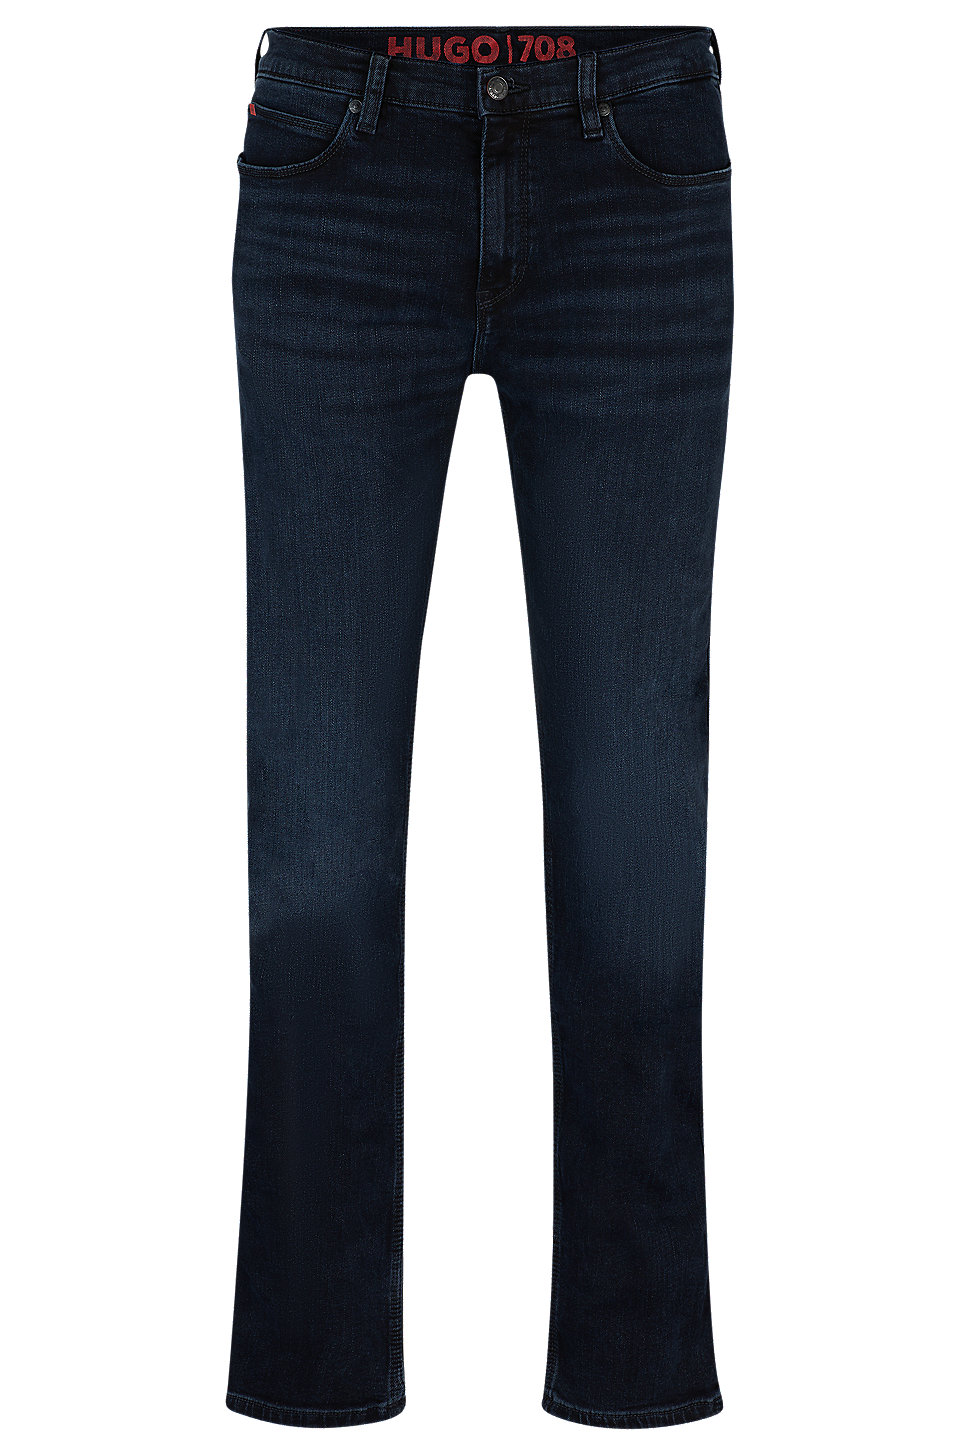 HUGO - Slim-fit jeans in blue-black stretch denim